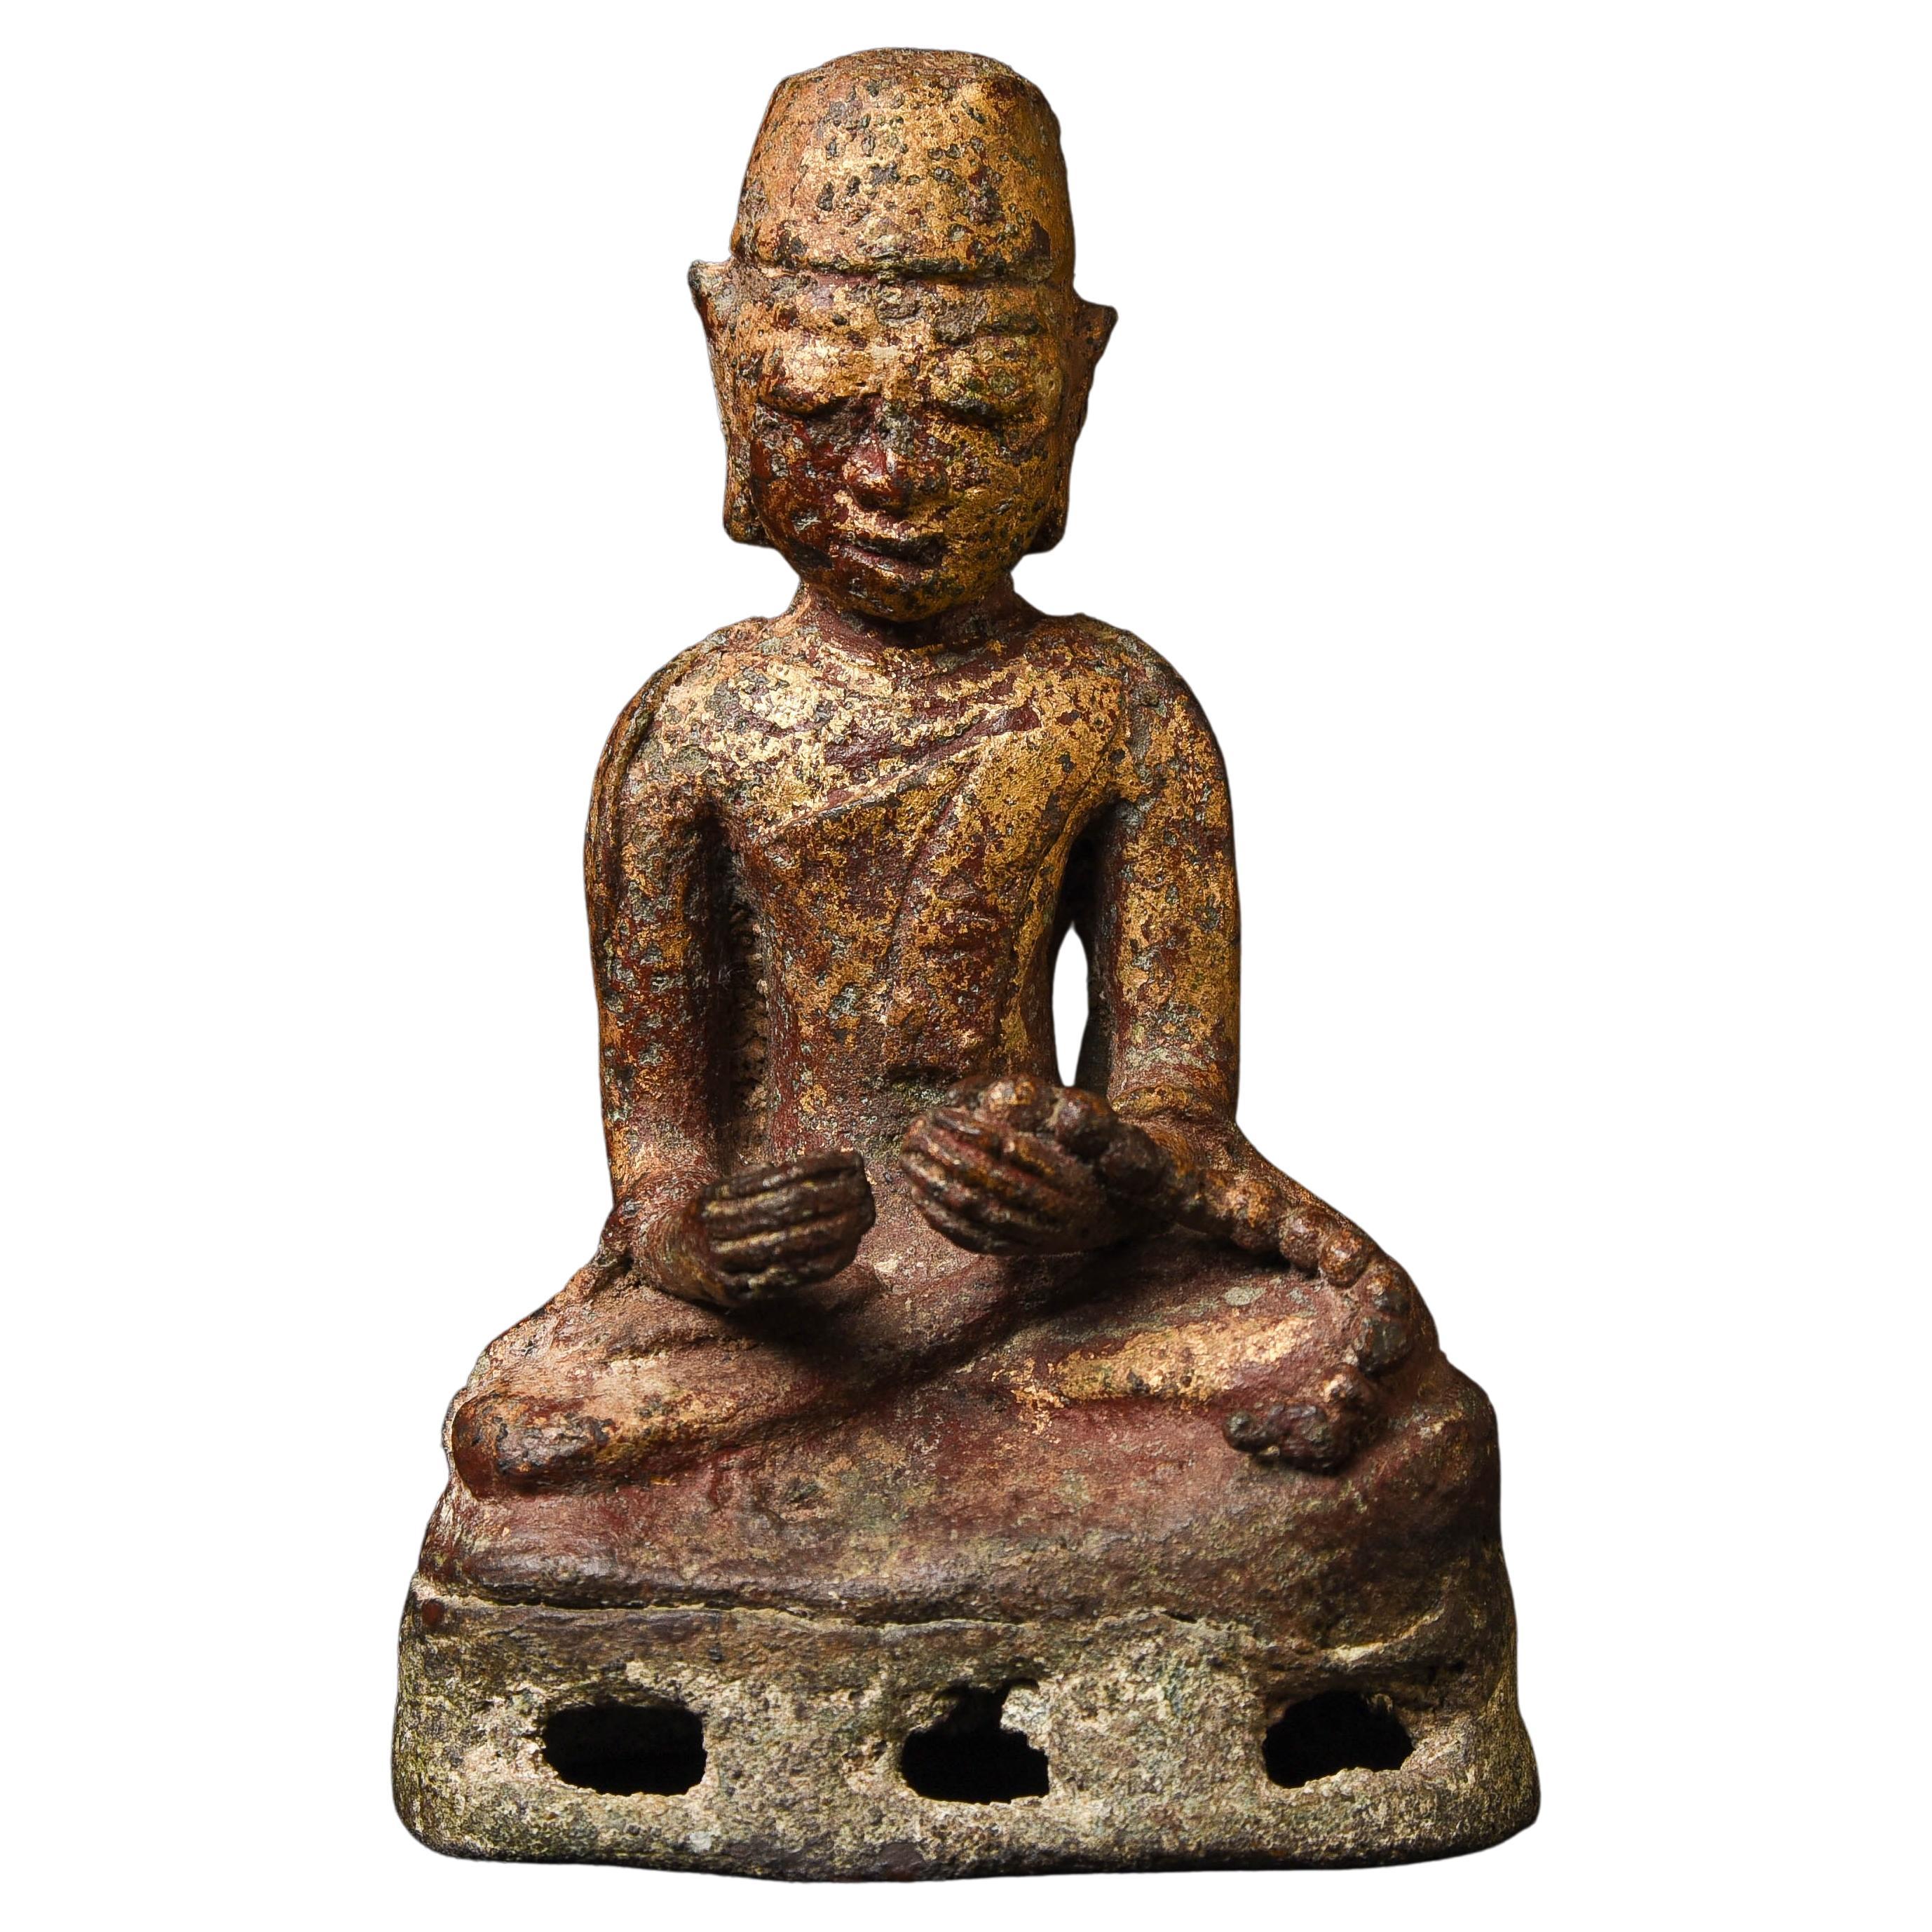 Burmese Monk, Cast Out of a Lead/Bronze Alloy, 9592